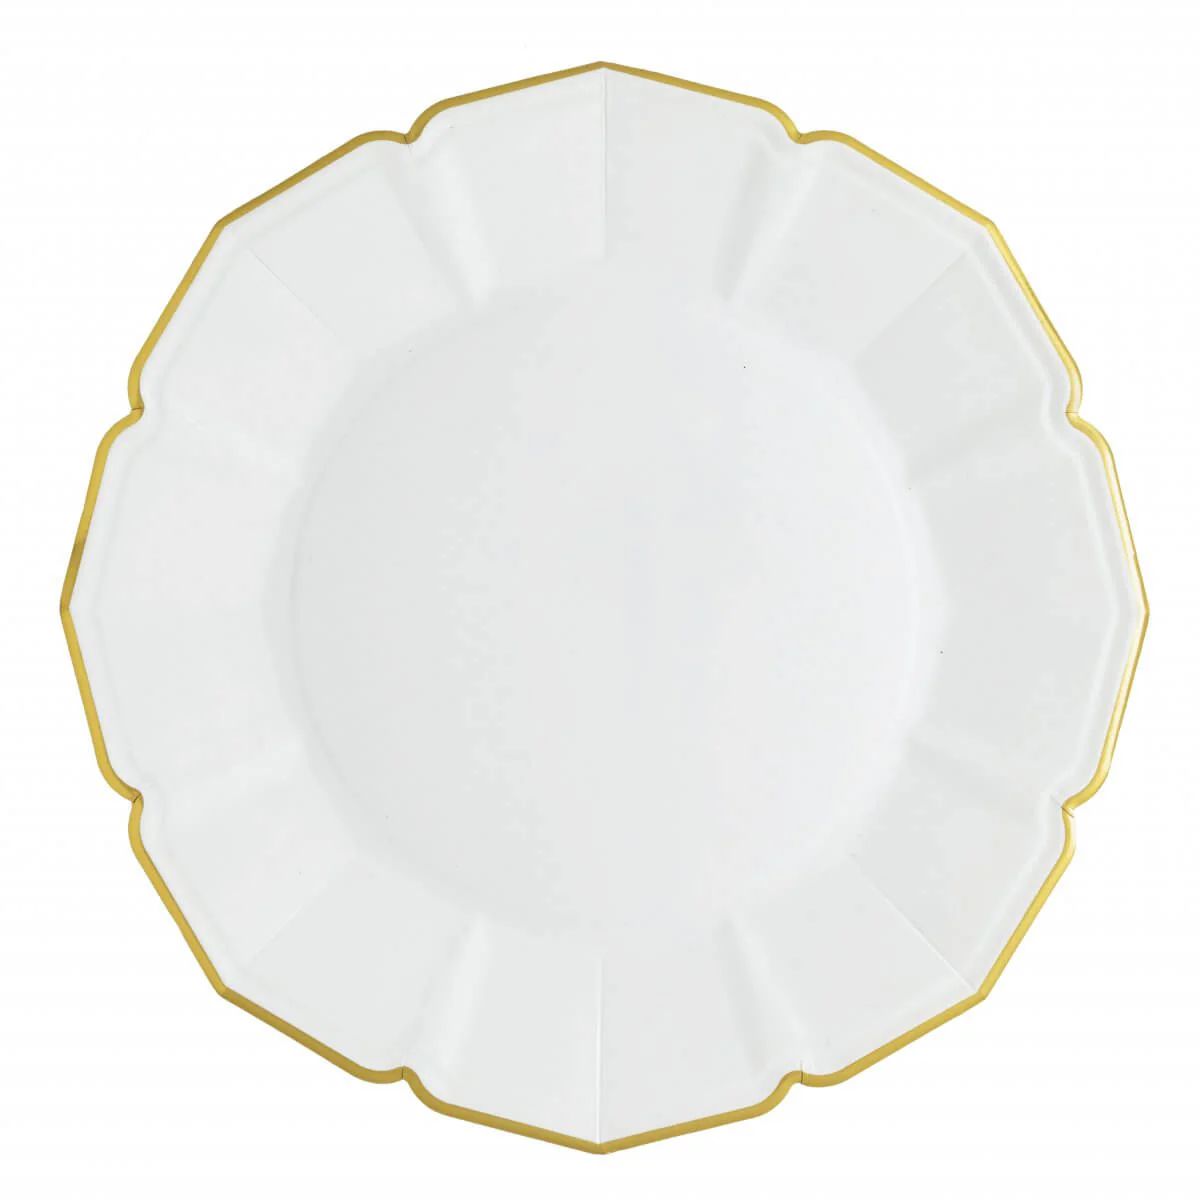 Ornate Bright White Dinner Paper Plates | Ellie and Piper